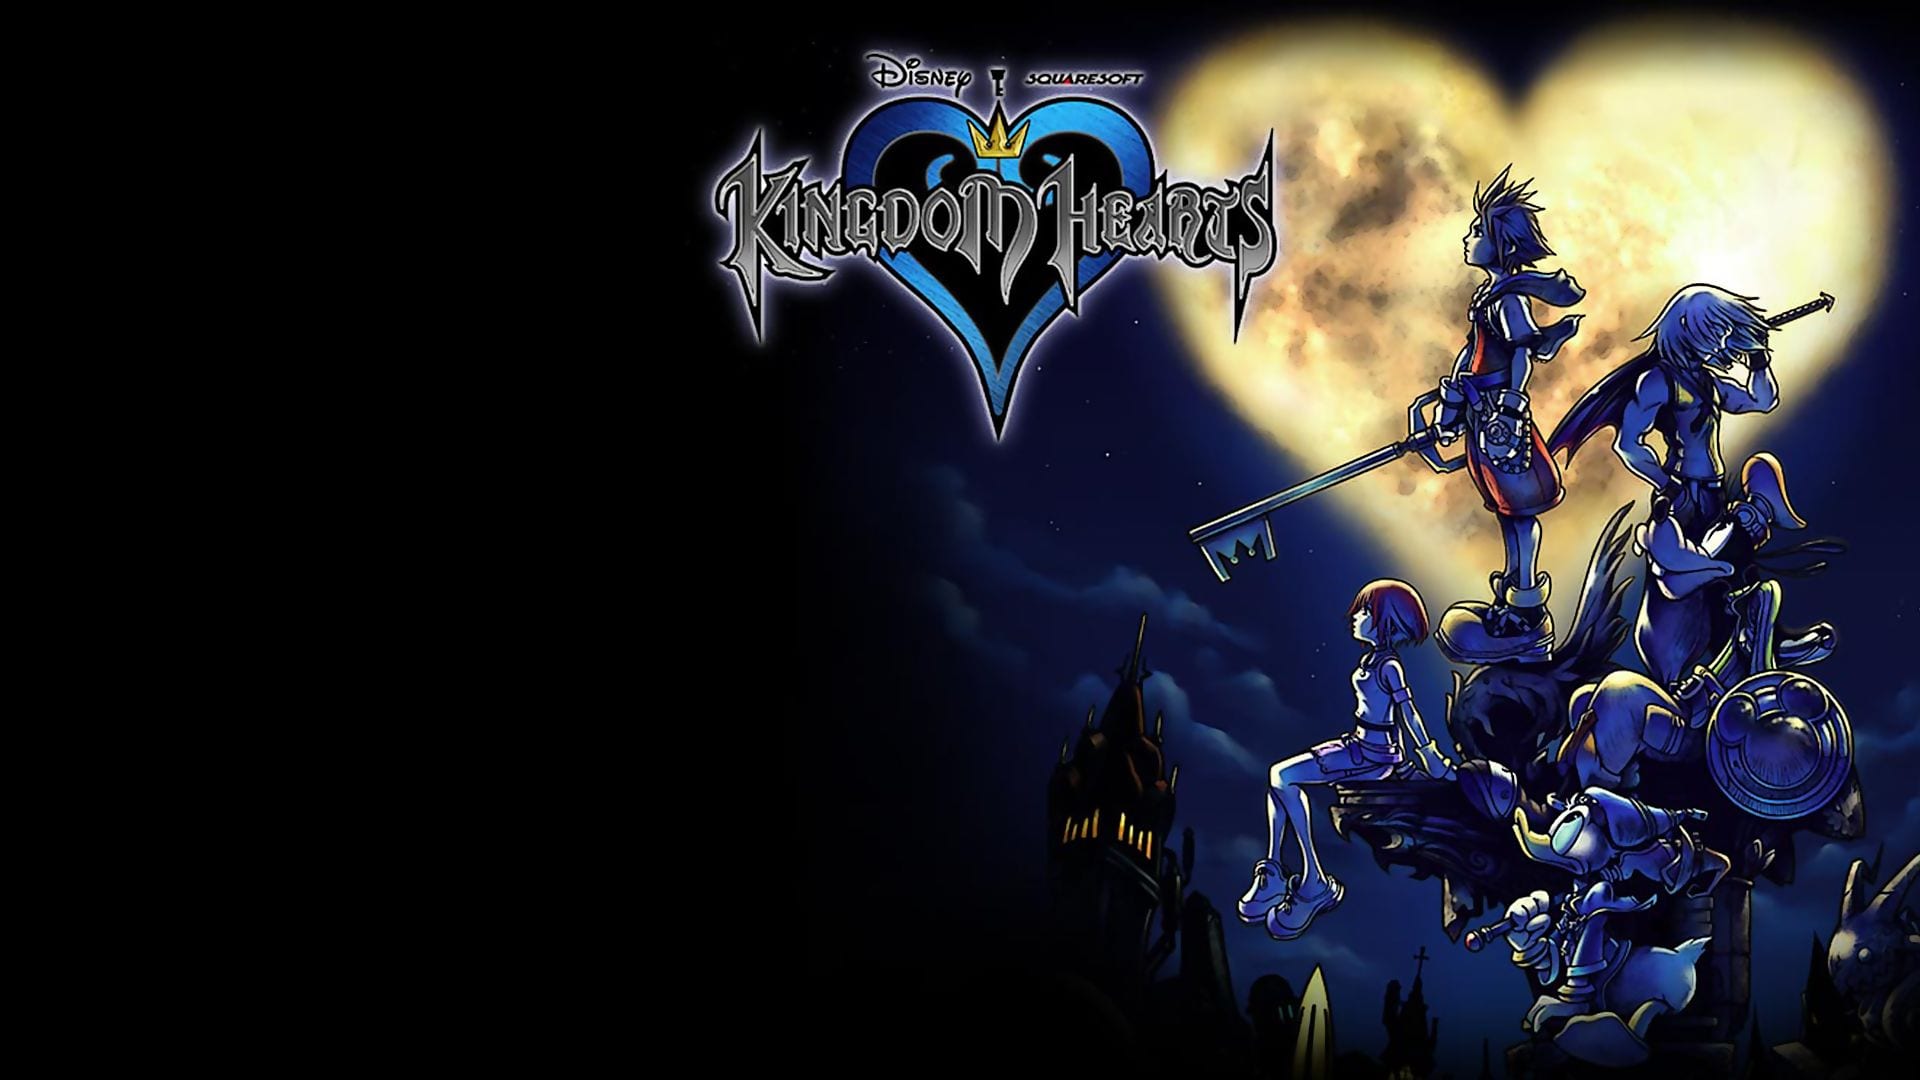 4k HD Kingdom Hearts Pc Wallpaper For Your Next Desktop